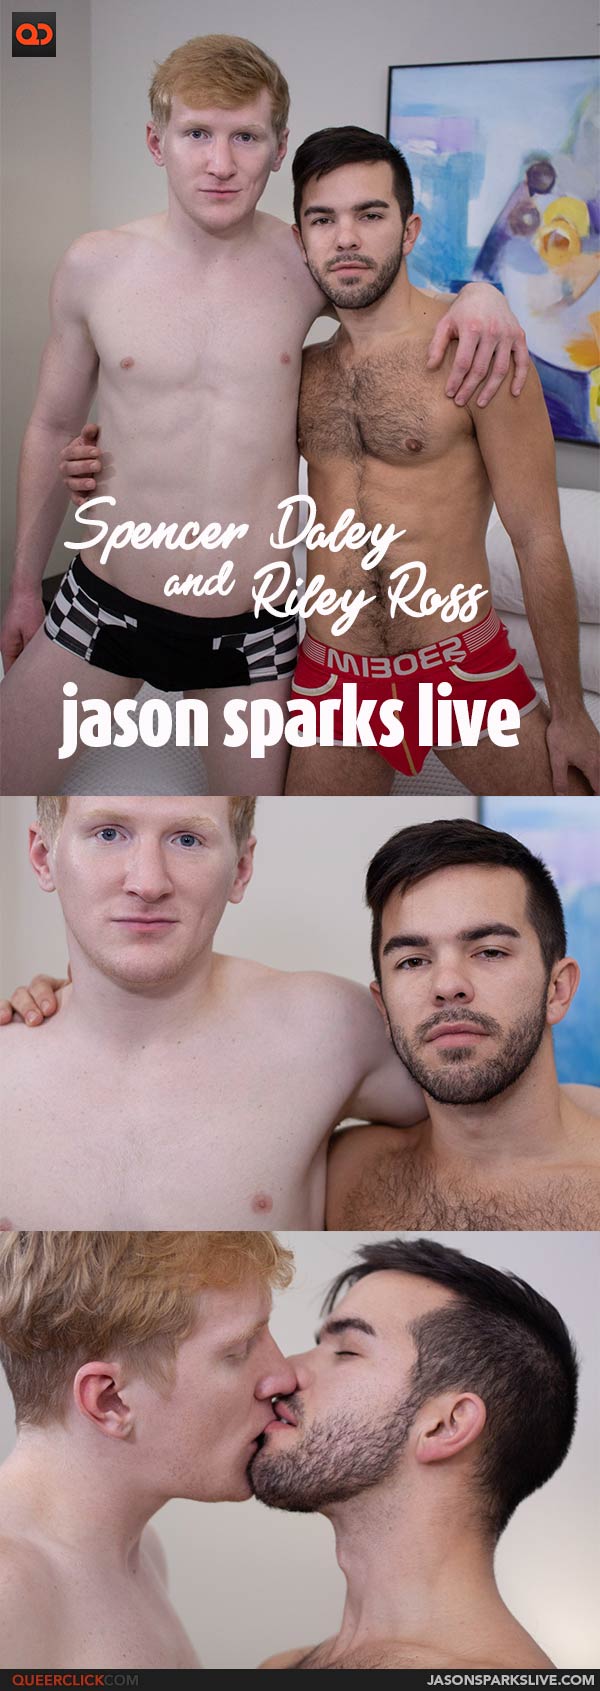 JasonSparksLive: Riley Ross and Spencer Daley